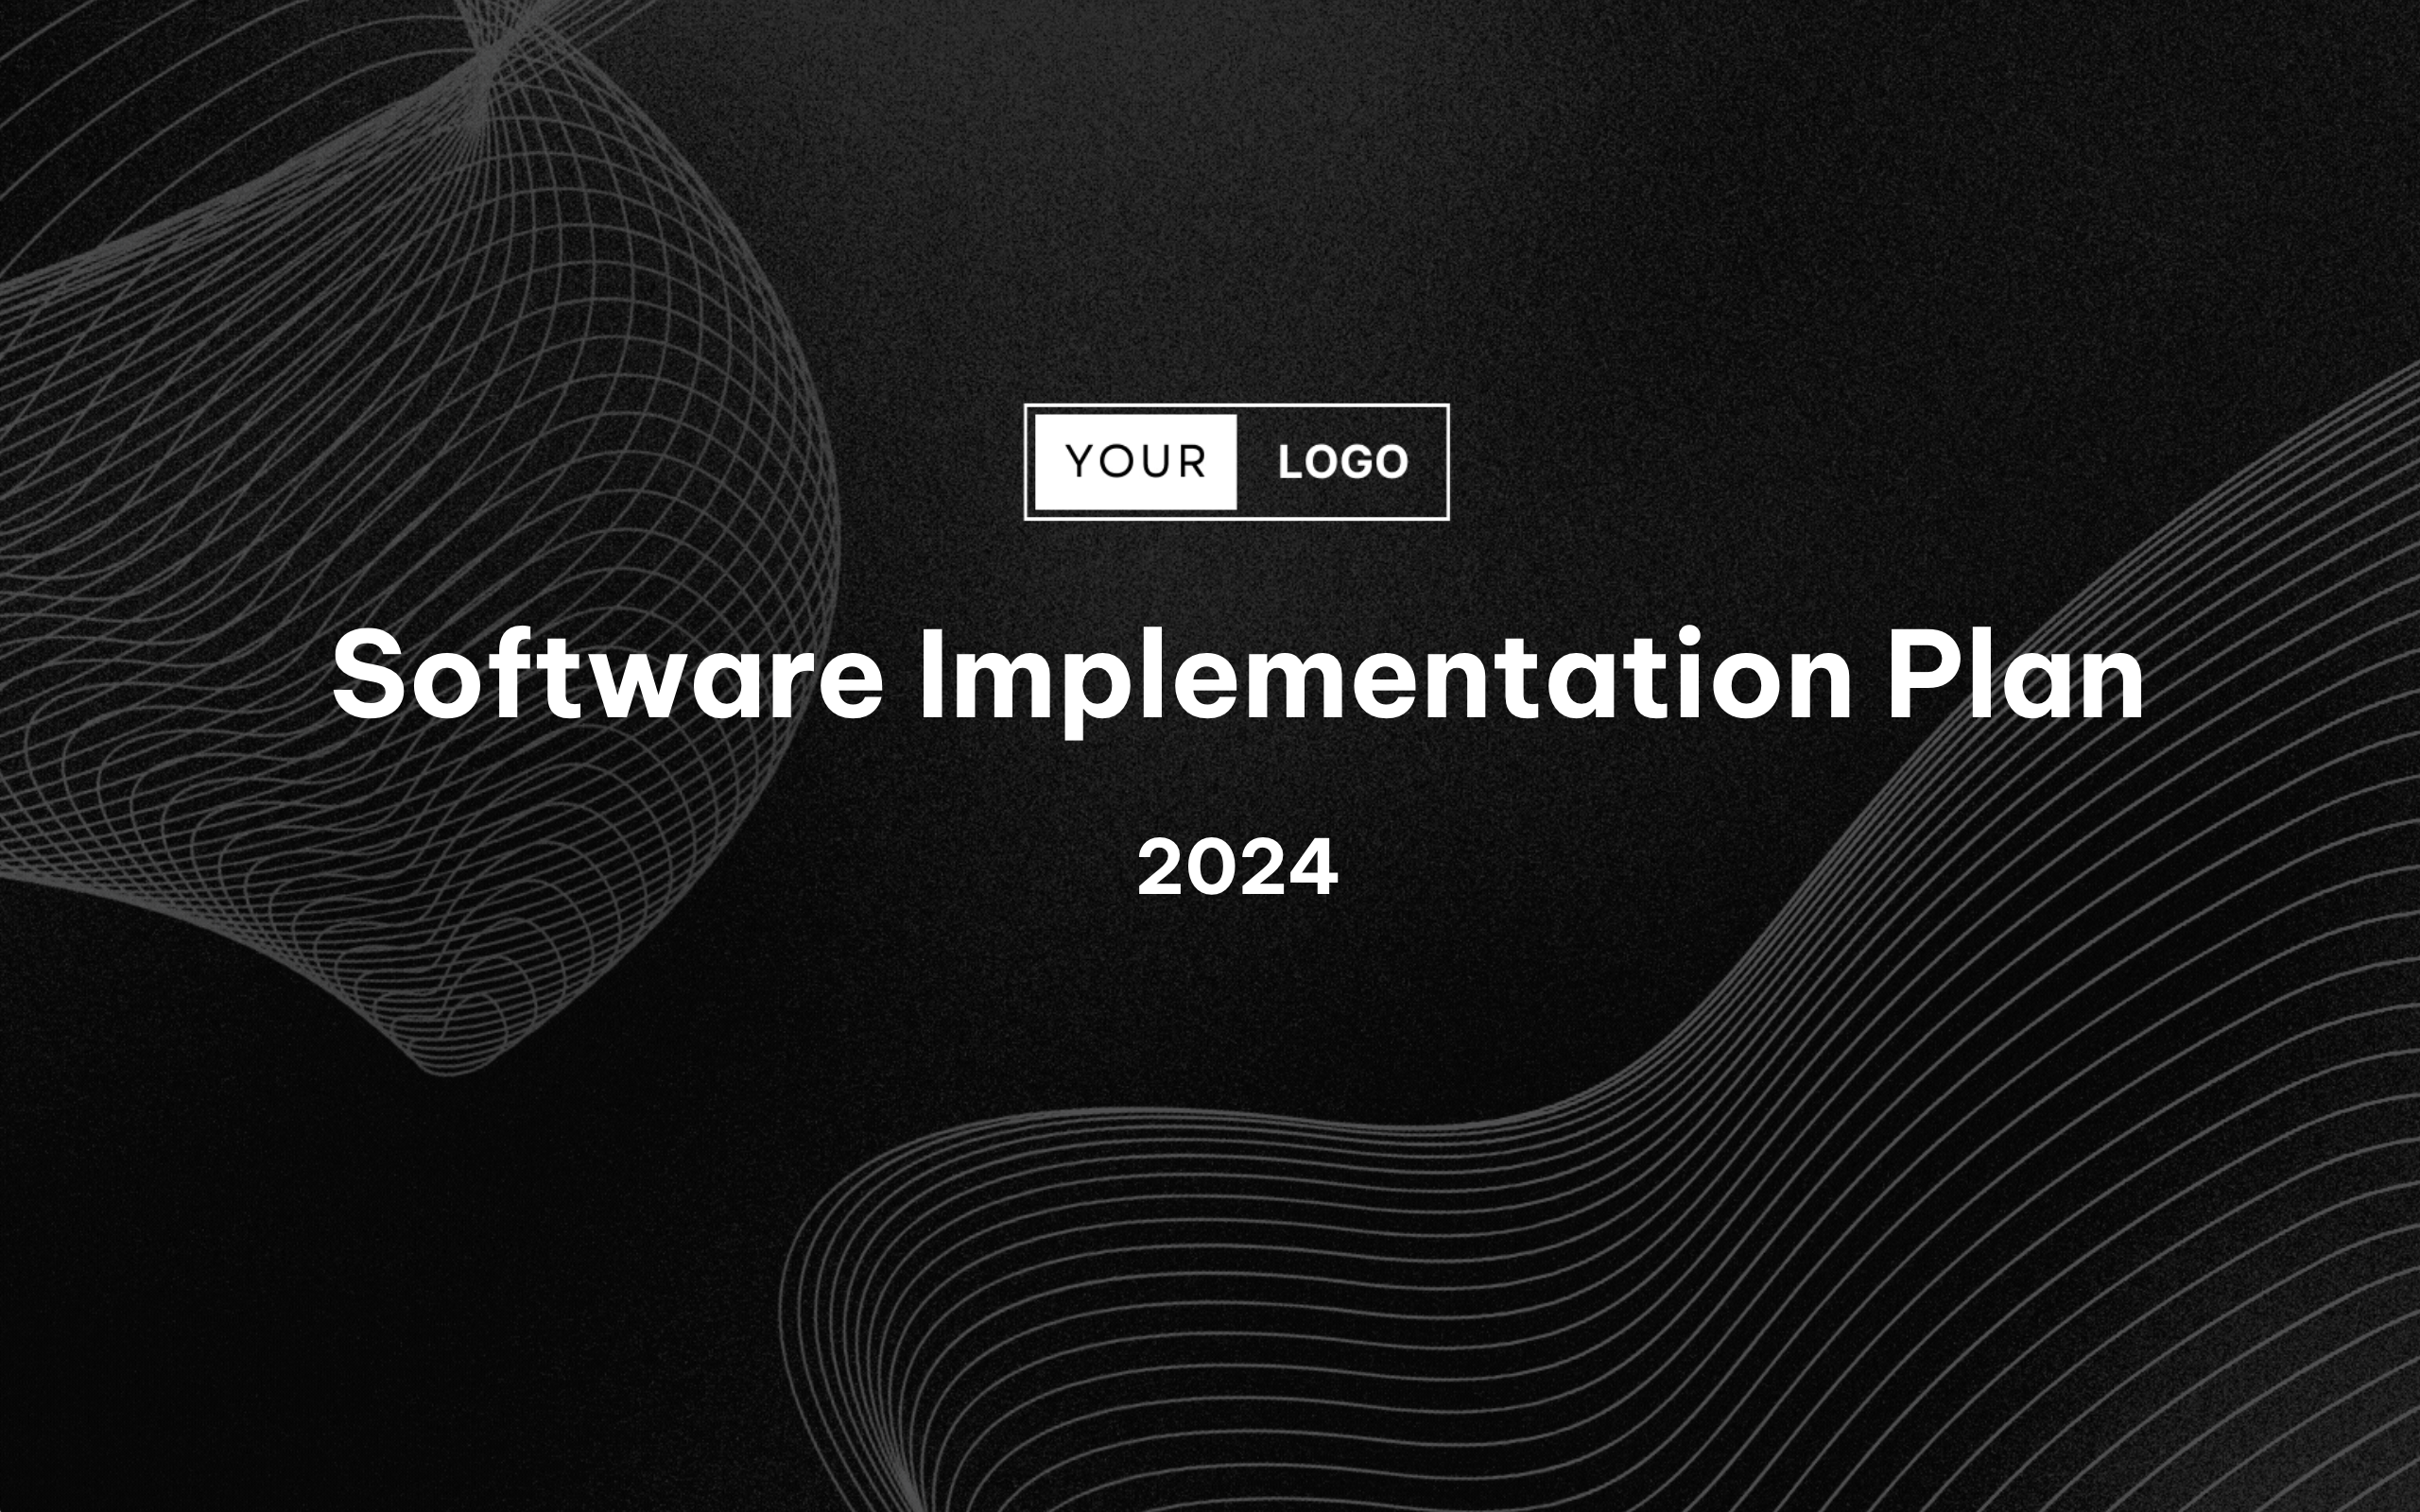 Software Implementation Plan Template